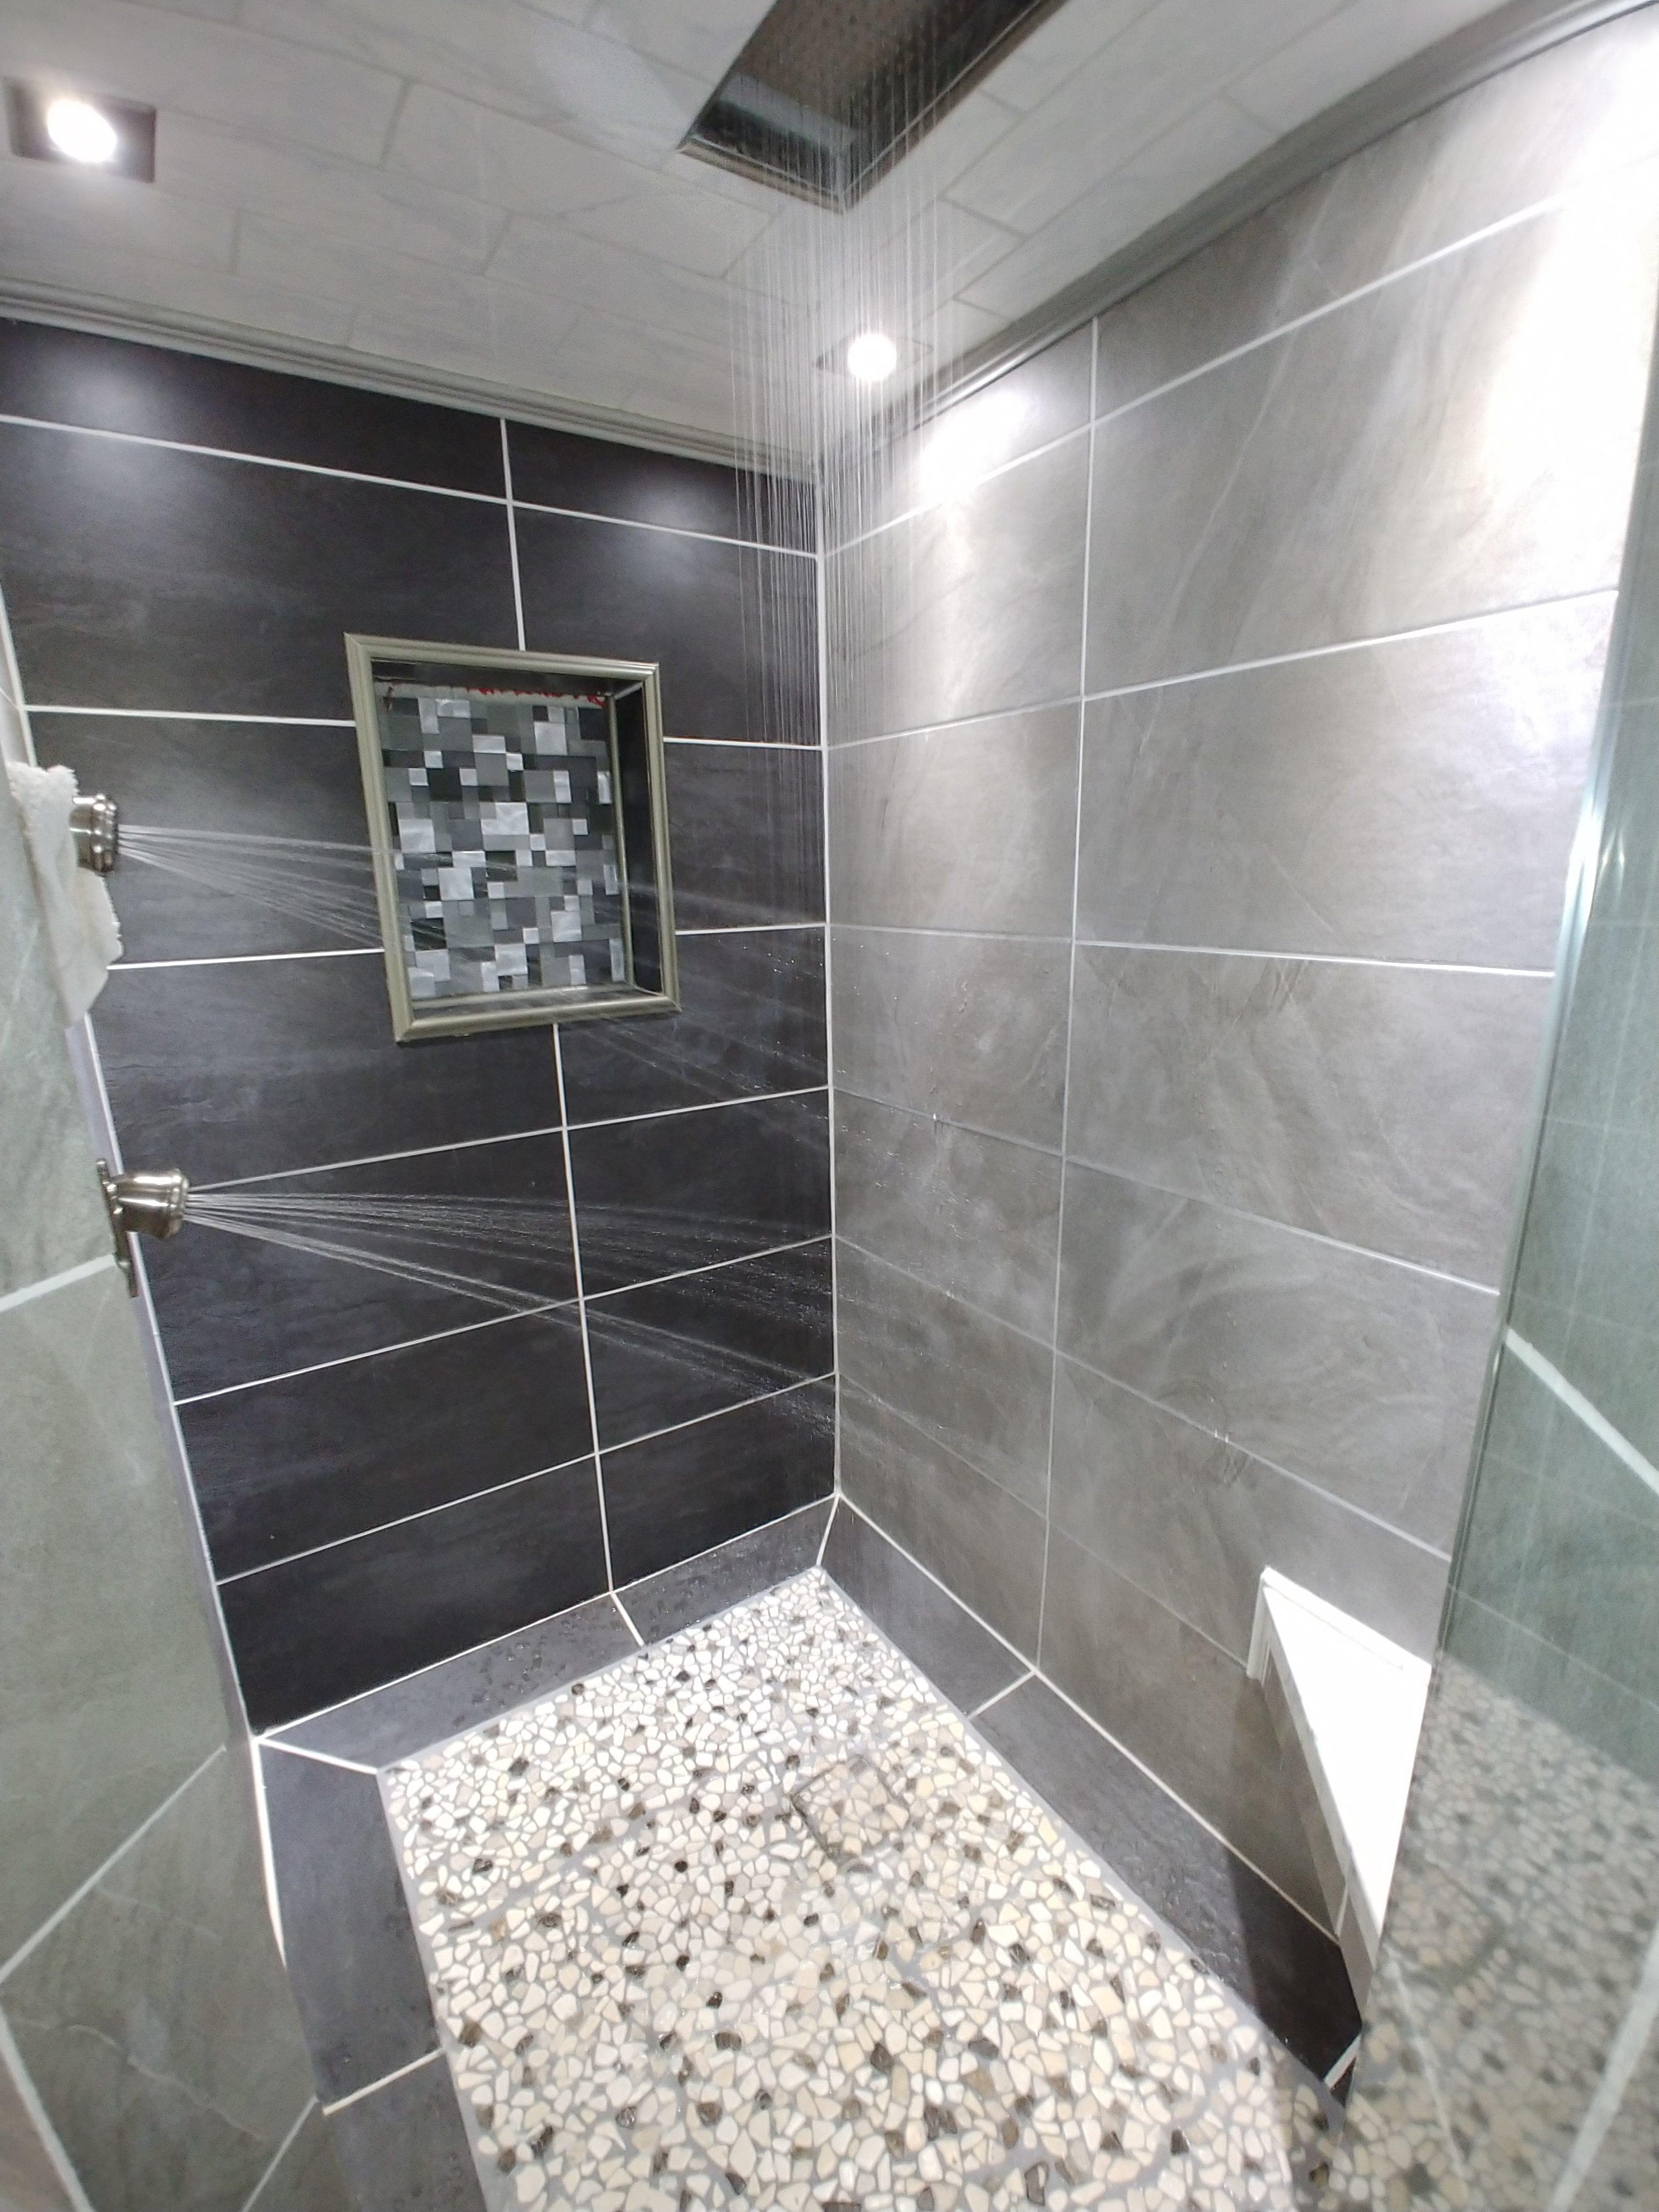 bath tiles design modern bathroom tile designs bathroom tiles design ideas